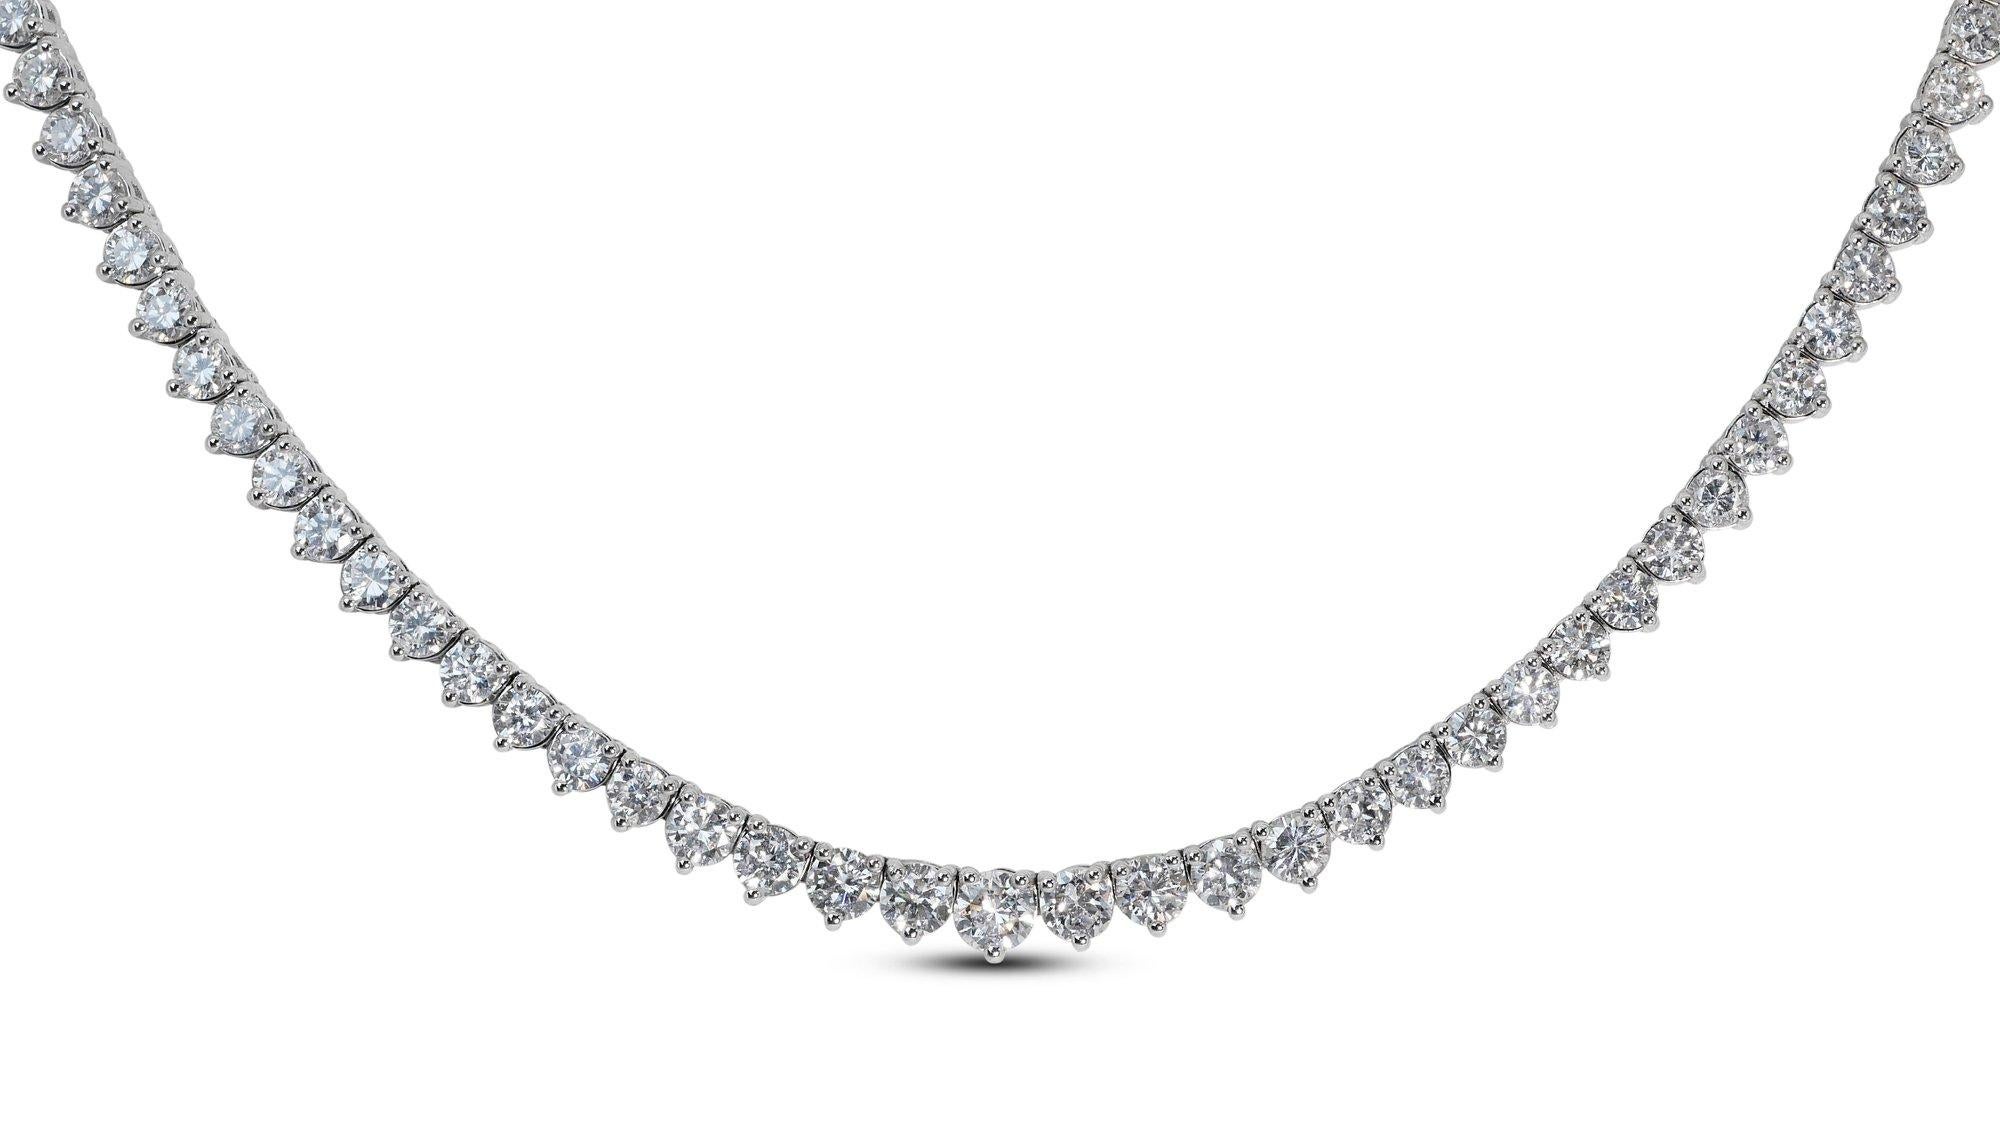 Ravishing 14k White Gold Necklace w/ 8.36 ct Natural Diamonds IGI Certificate For Sale 9